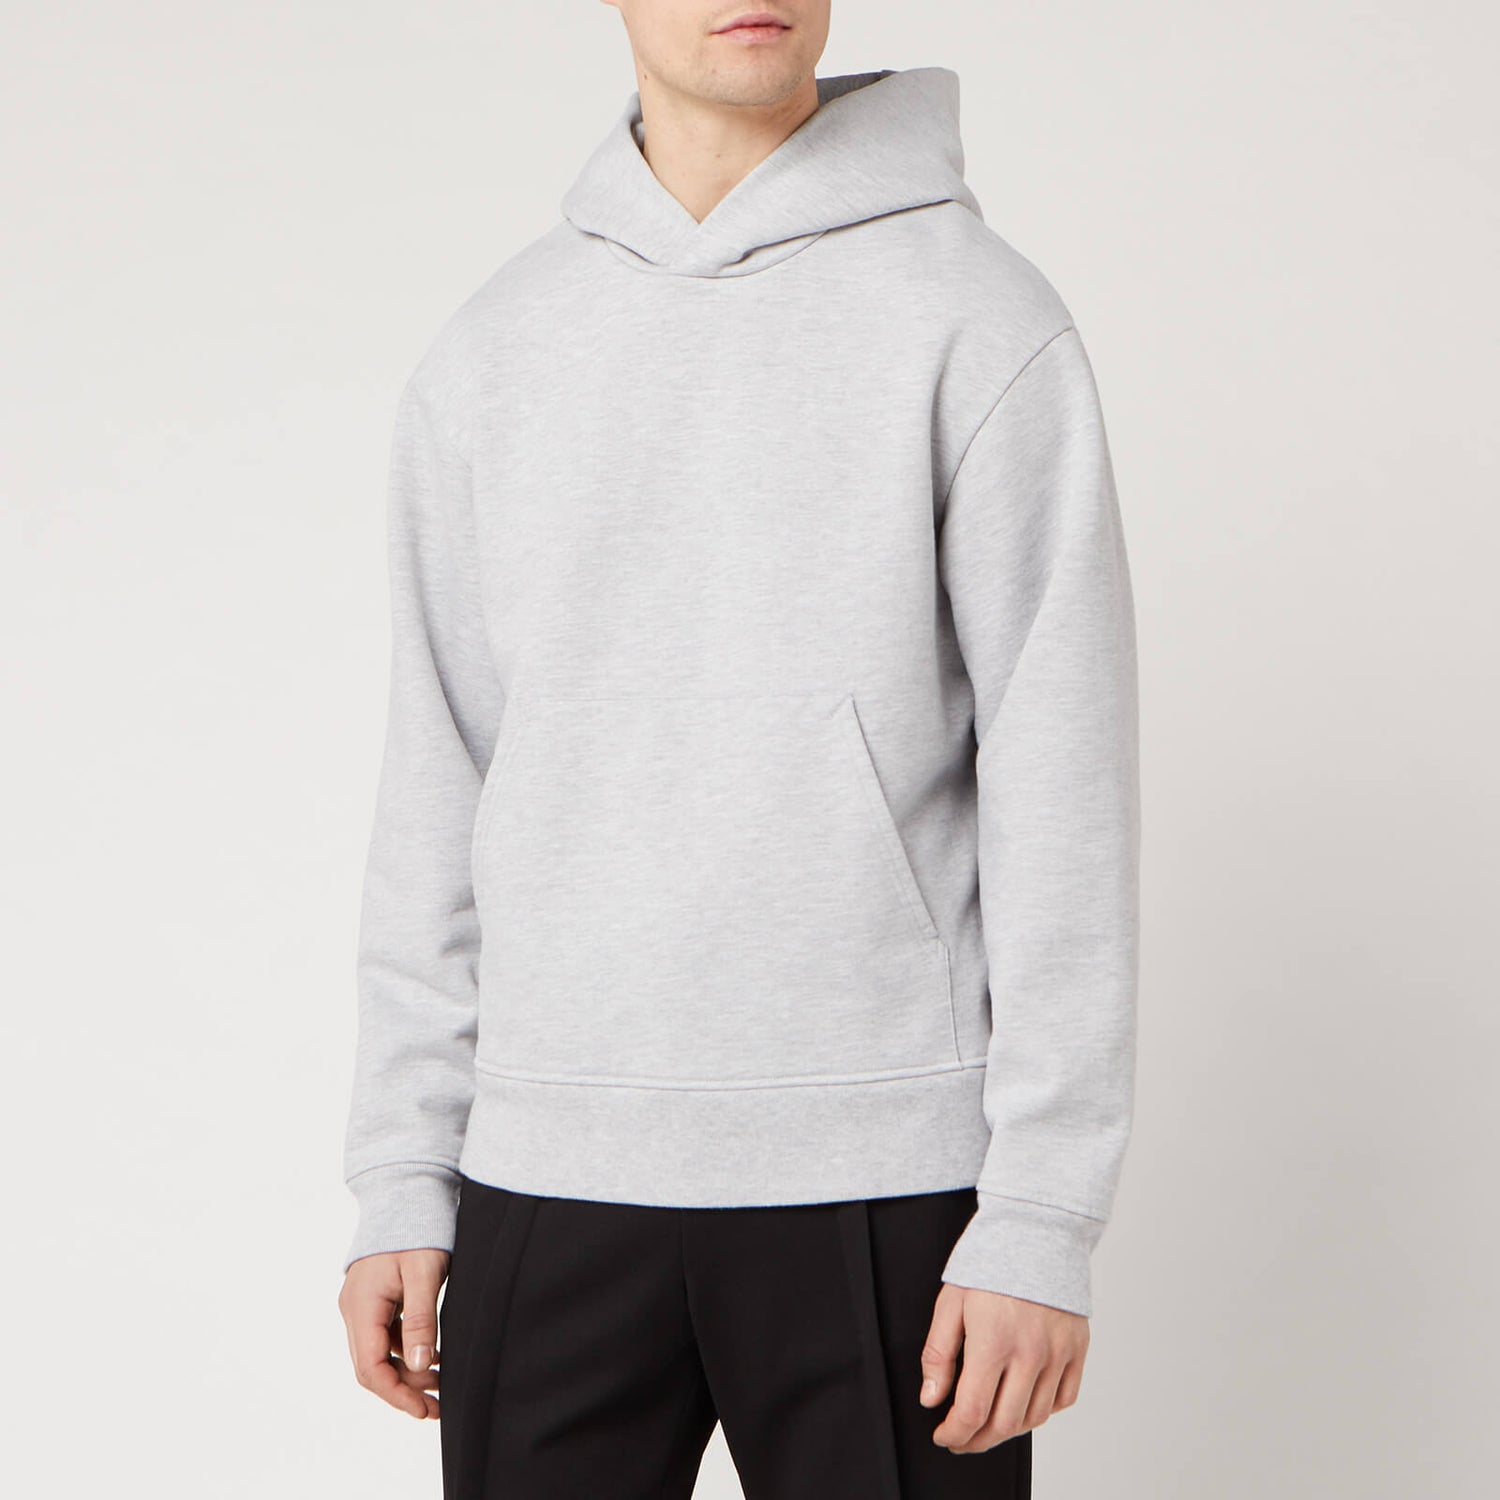 Acne Studios Men's Classic Fit Hooded Sweatshirt - Pale Grey Melange ...